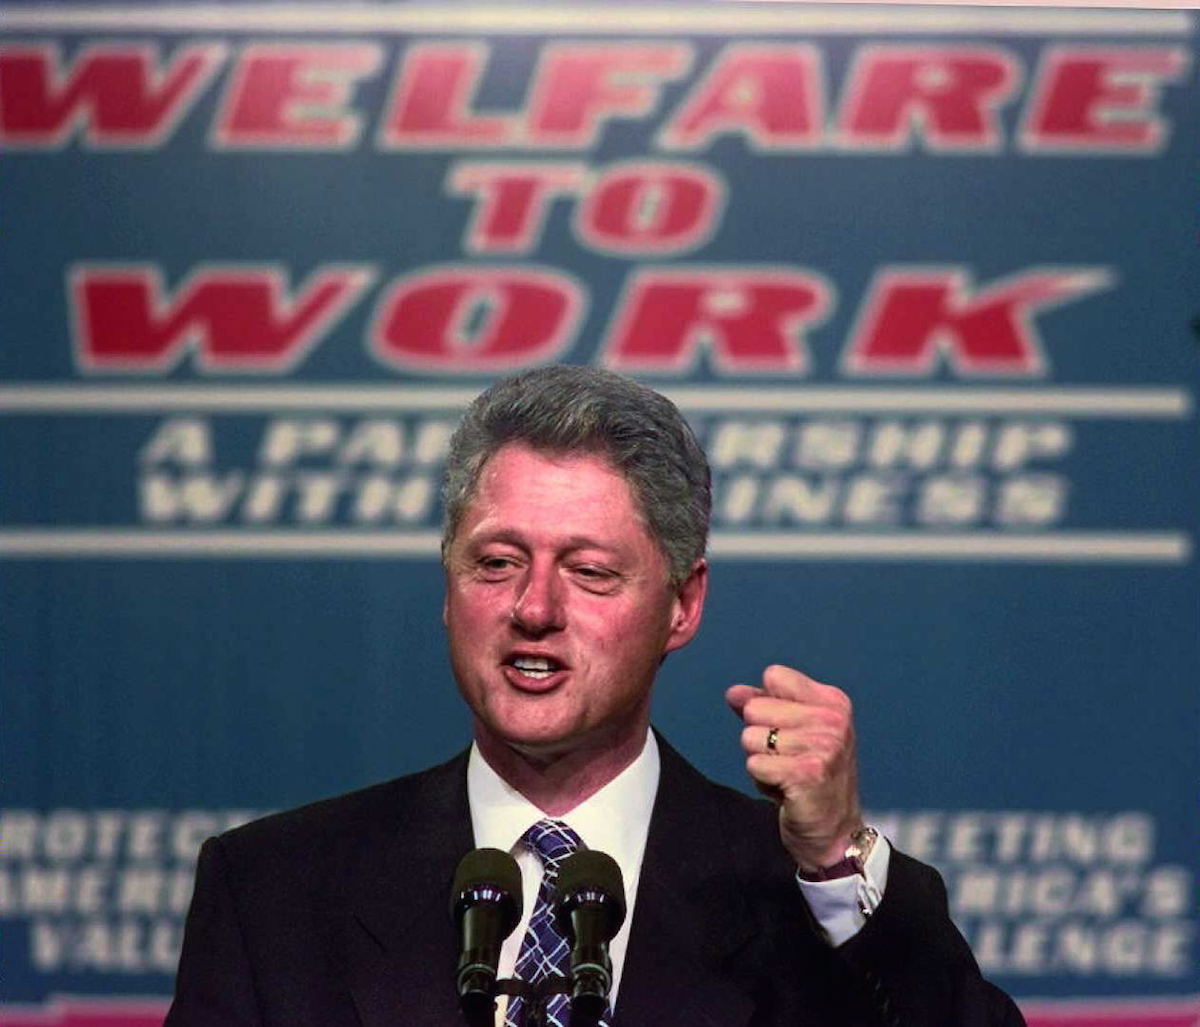 President Bill Clinton clinches his fist during an Oct. 27, 1996, speech on welfare reform at Vanderbilt University Medical Center in Nashville (Paul J. Richards—AFP/Getty Images)